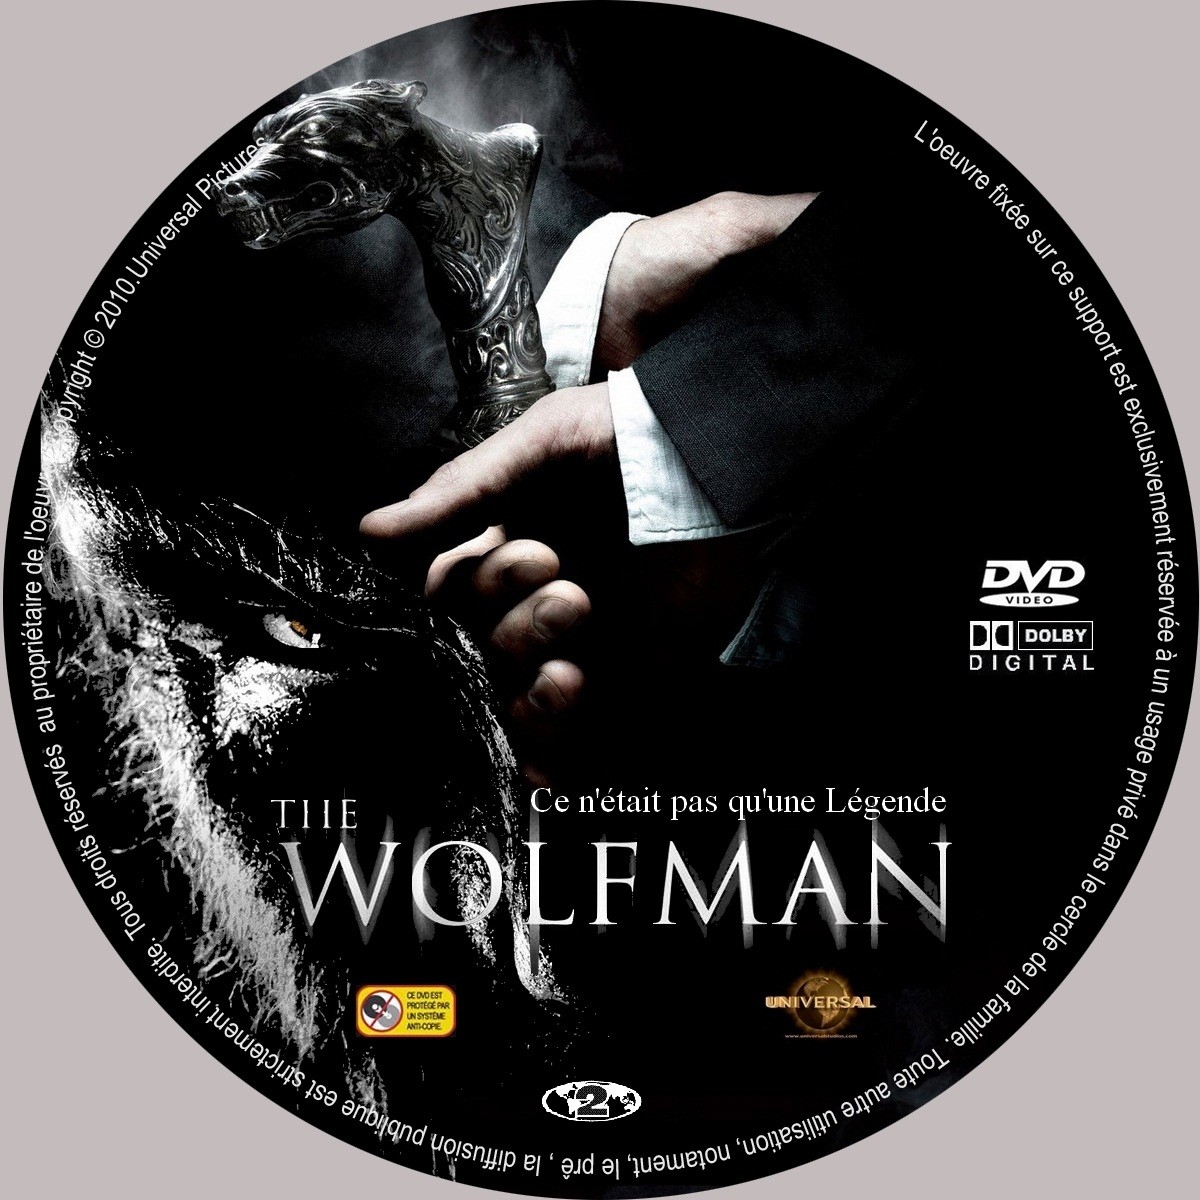 The wolfman custom